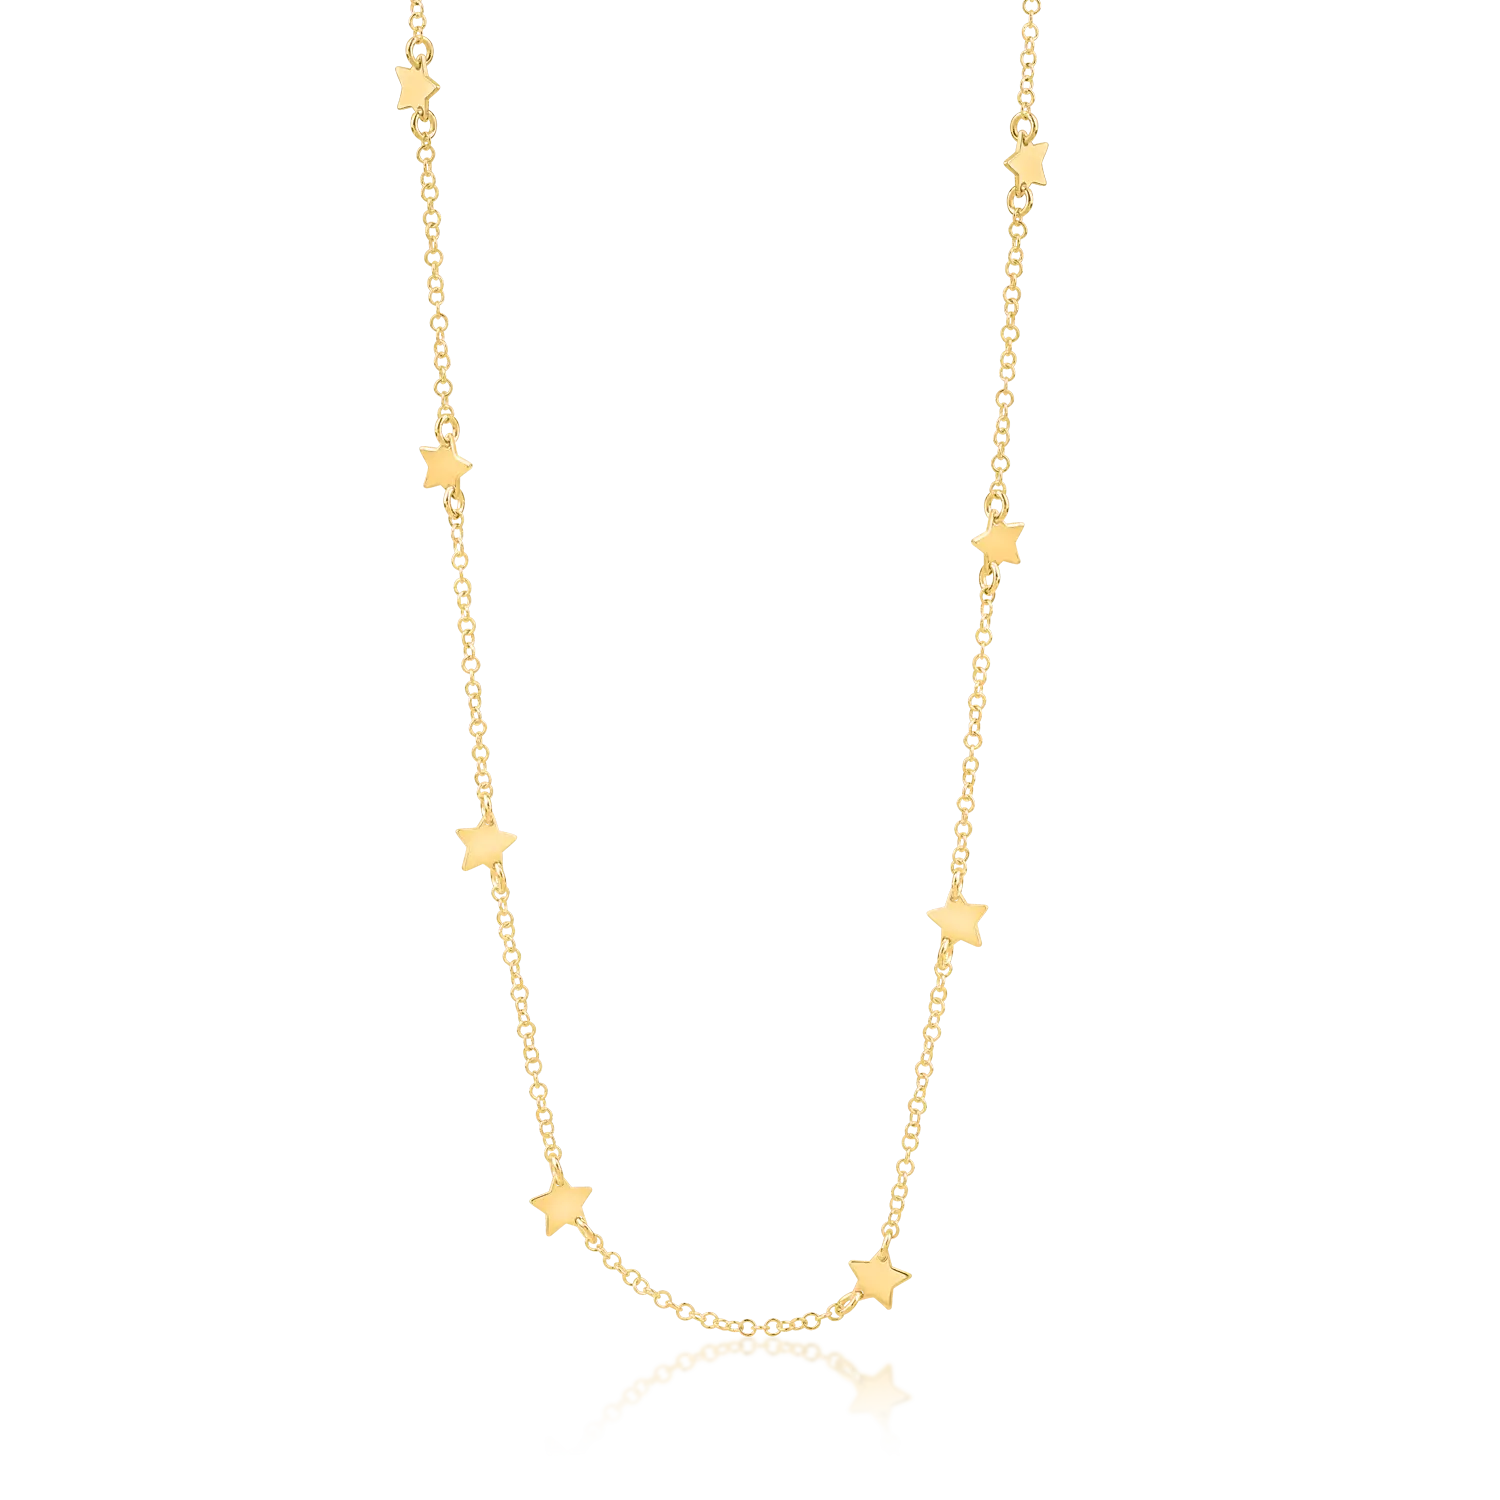 Yellow gold star chain